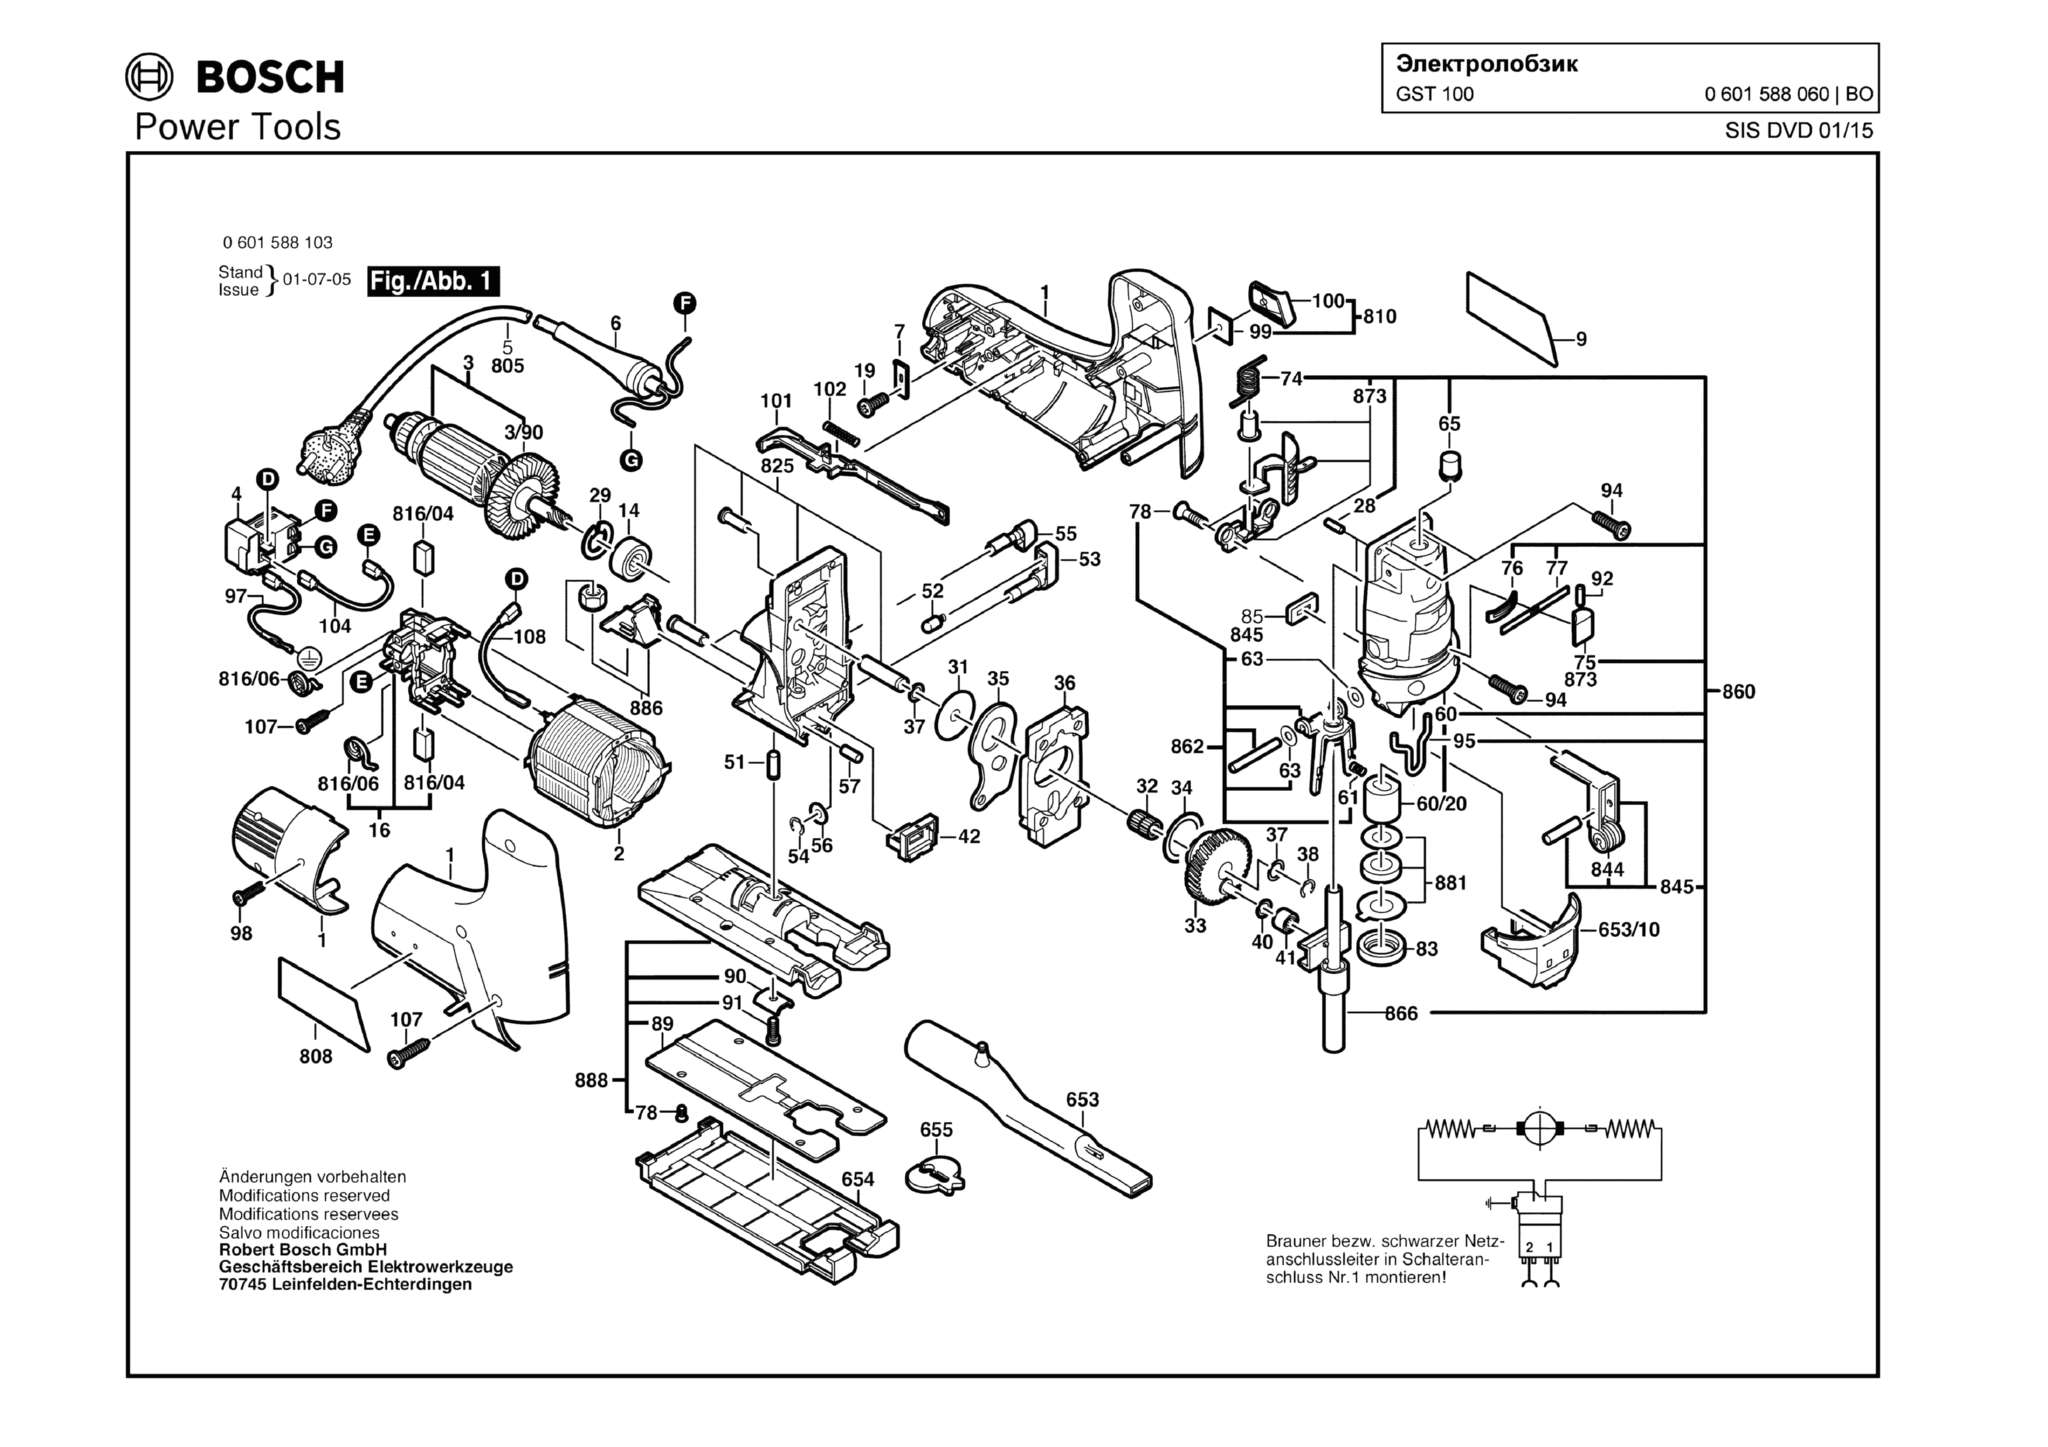 Запчасти, схема и деталировка Bosch GST 100 (ТИП 0601588060)